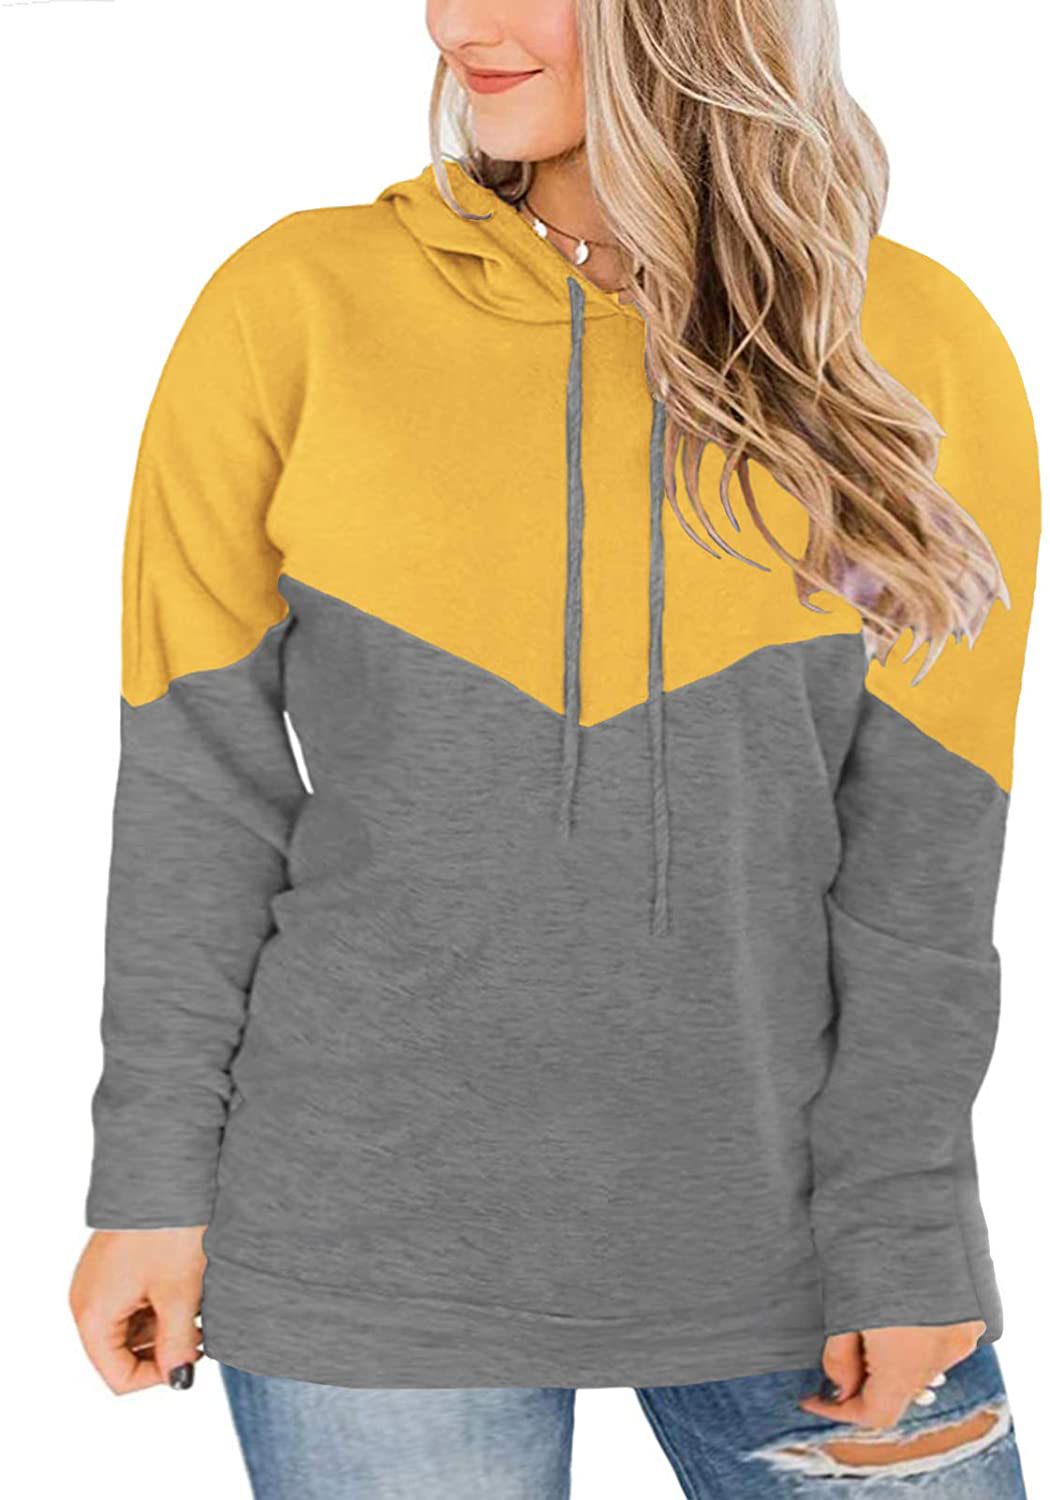 VISLILY Plus-Size hoodies for Women Color Block Pullover Sweatshirts